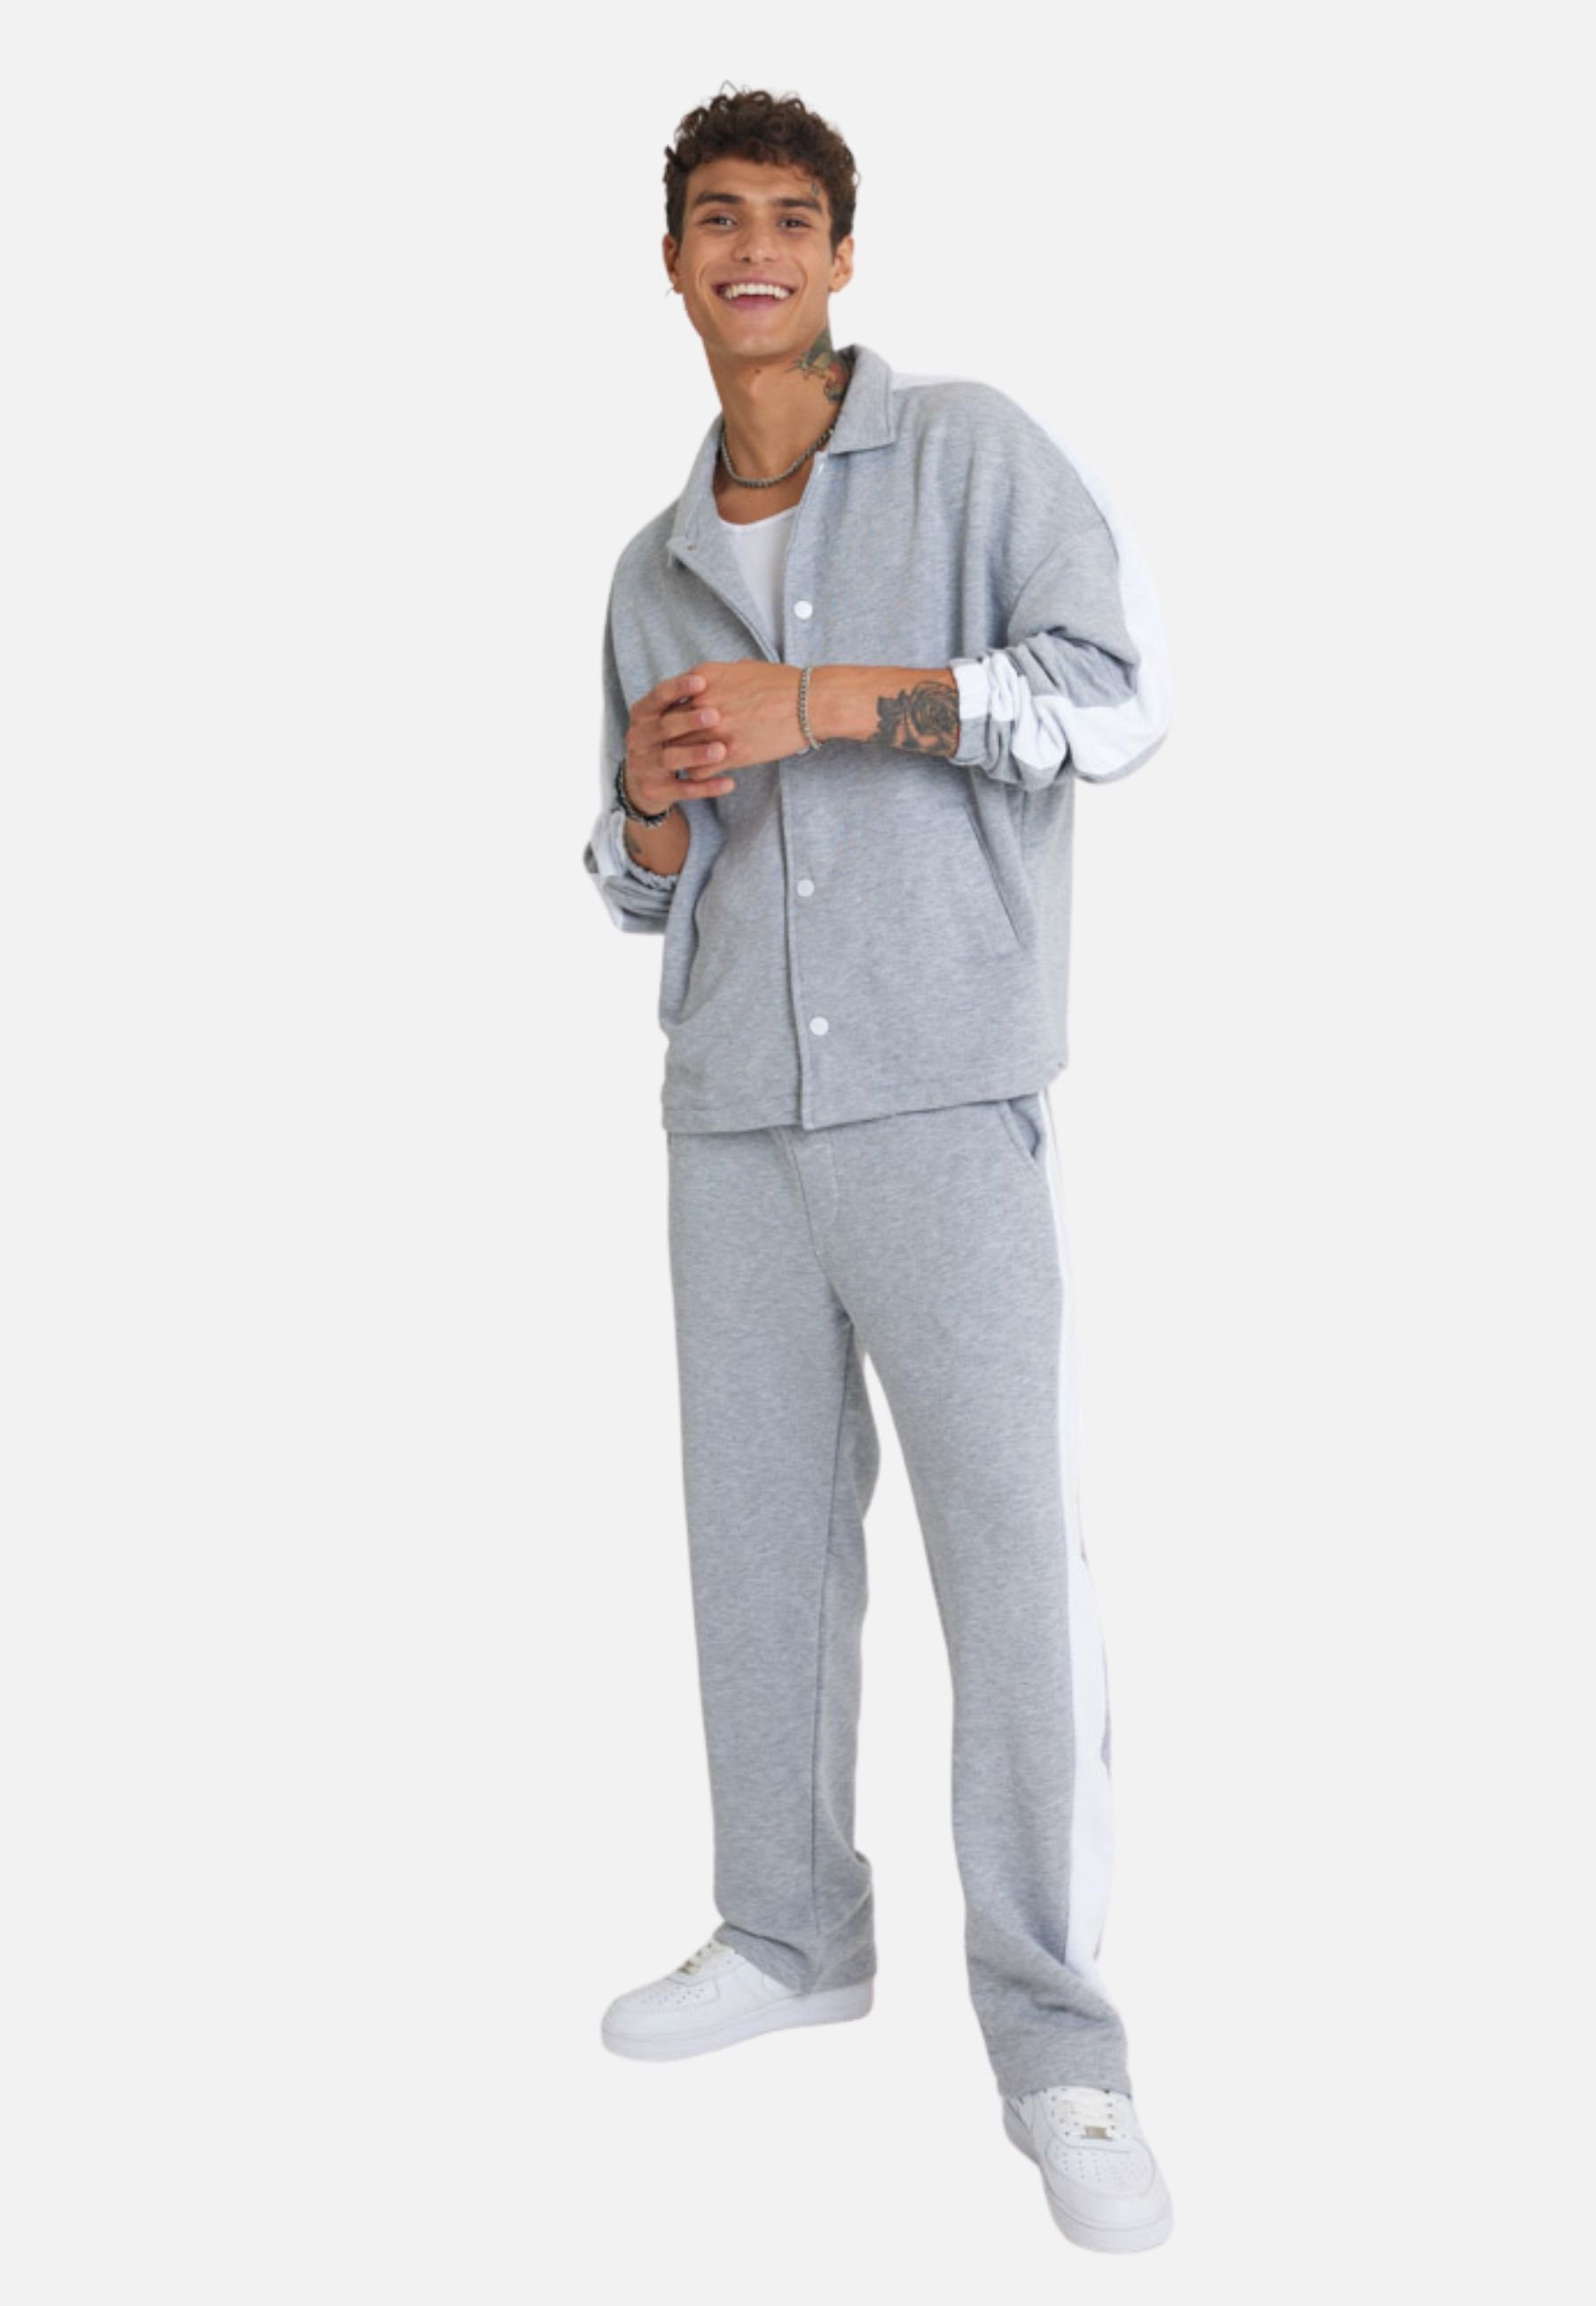 COFI Casuals Stripe Grau Set Jogginganzug Jacke Hose mit Streifen Jogginganzug